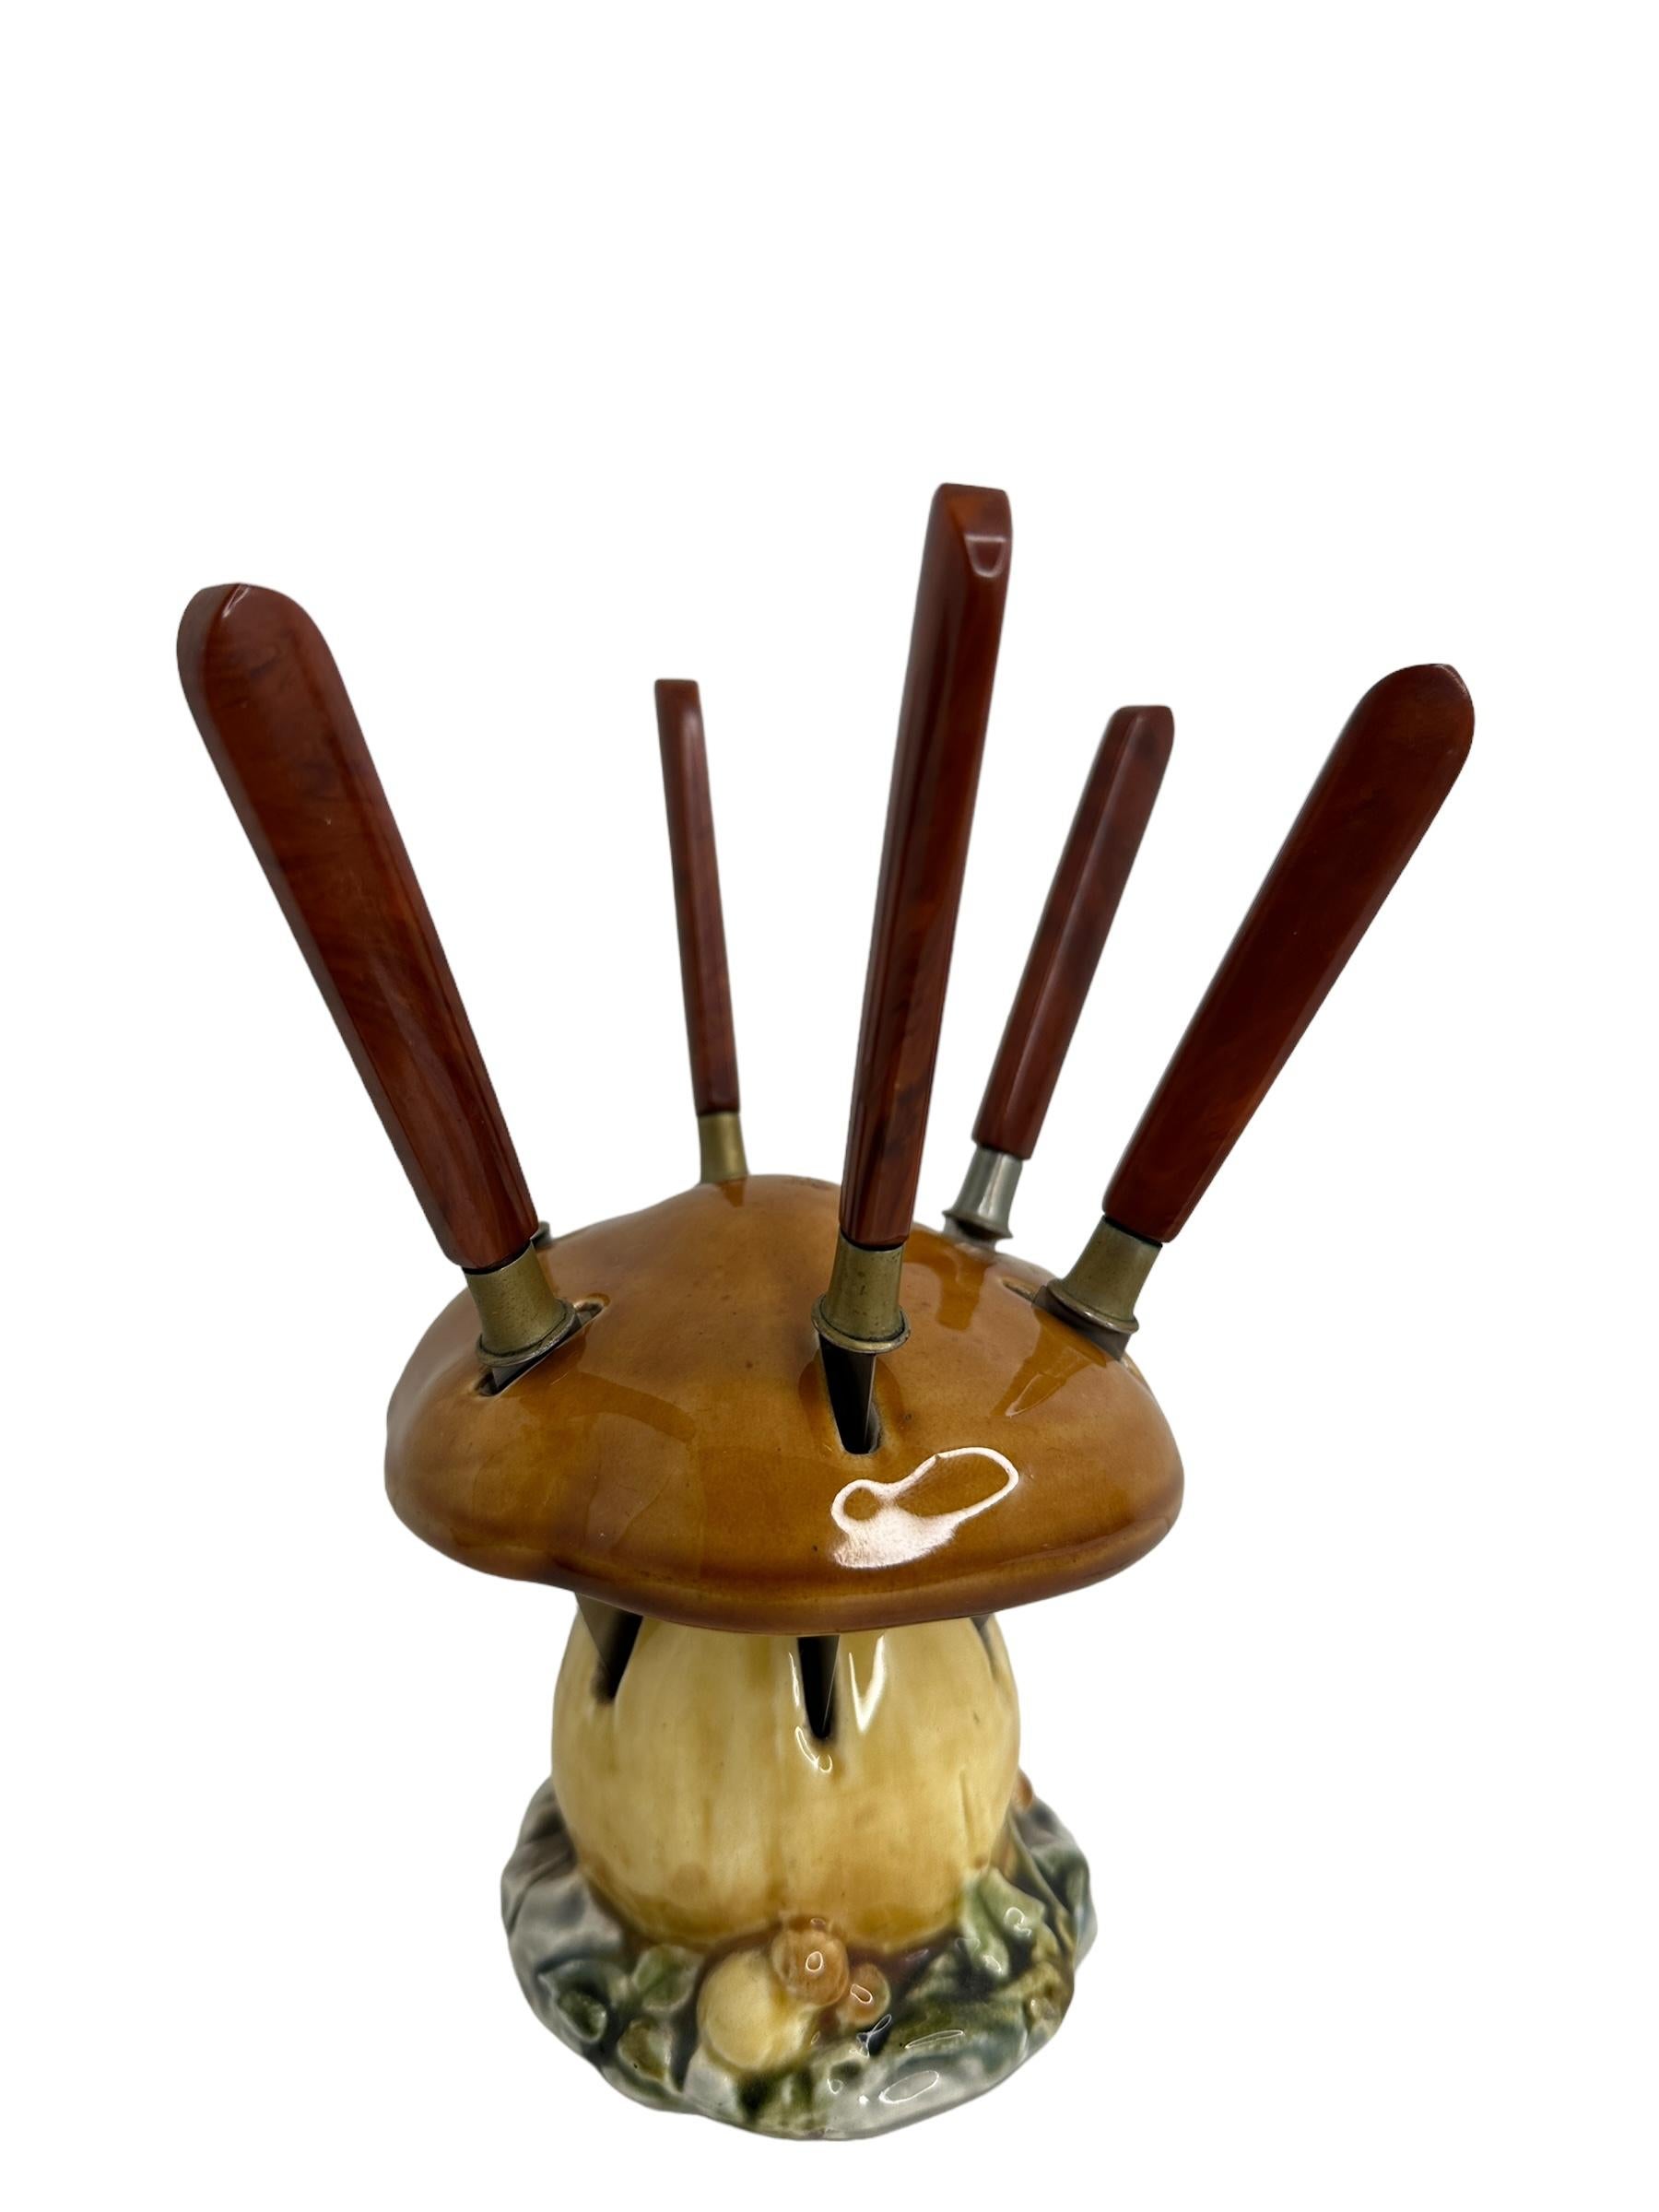 Bakelite Fruit Knife Set with Ceramic Mushroom Stand, Vintage German 1930s In Good Condition For Sale In Nuernberg, DE